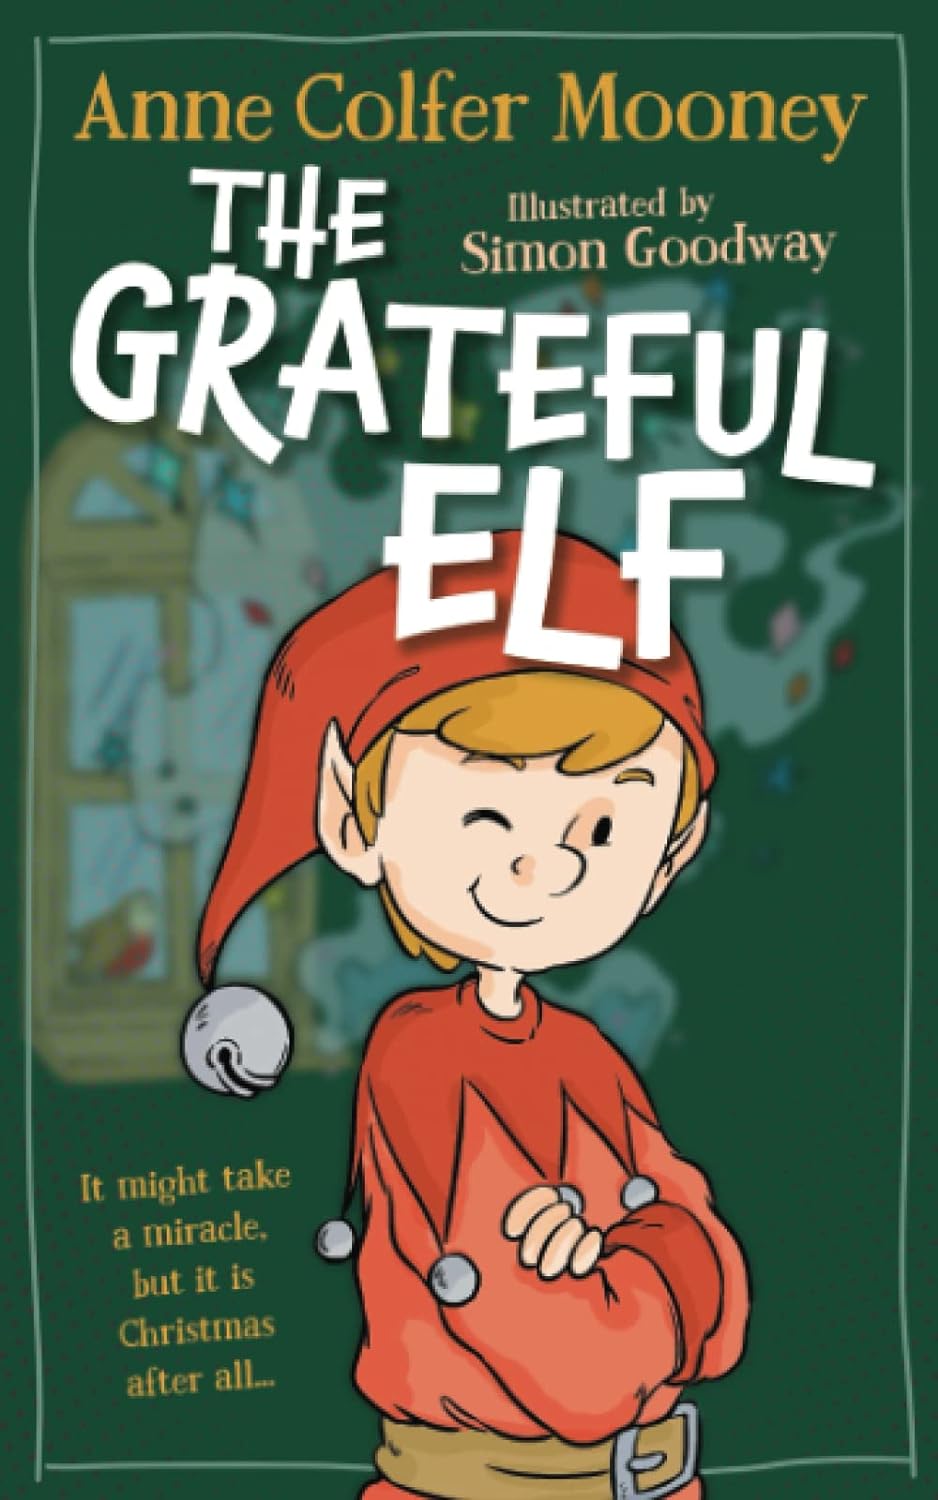 The Grateful Elf by Anne Colfer Mooney